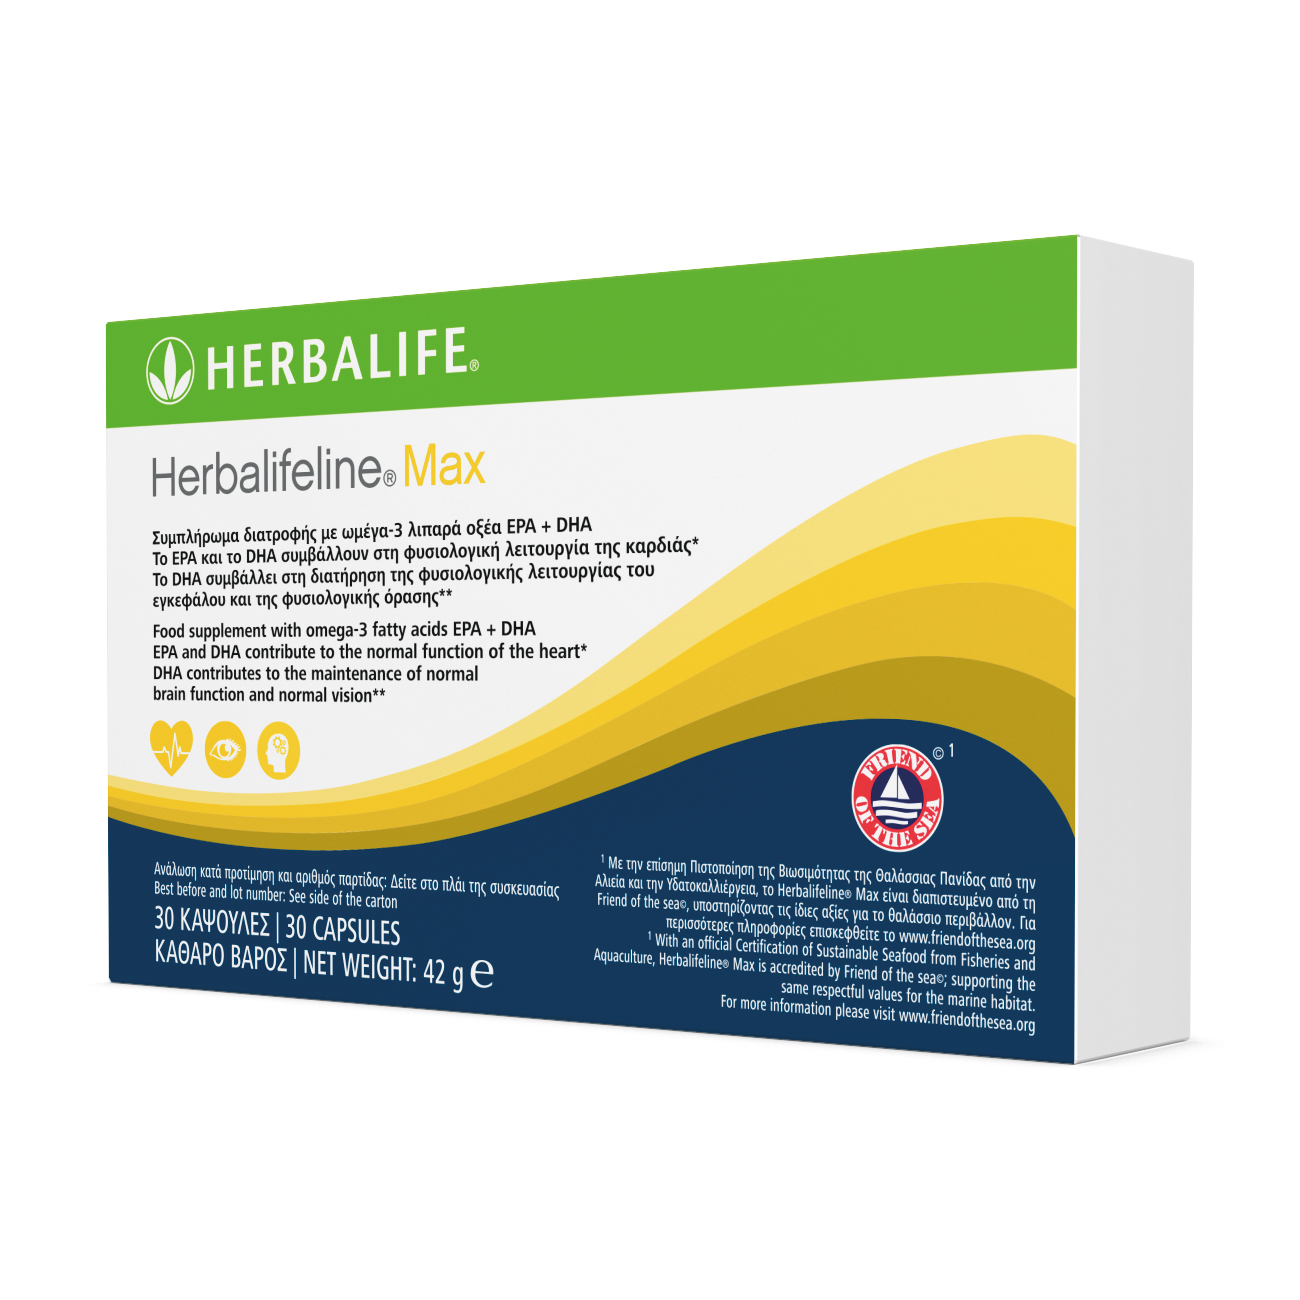 Herbalifeline® Max Ωμέγα-3  product shot.